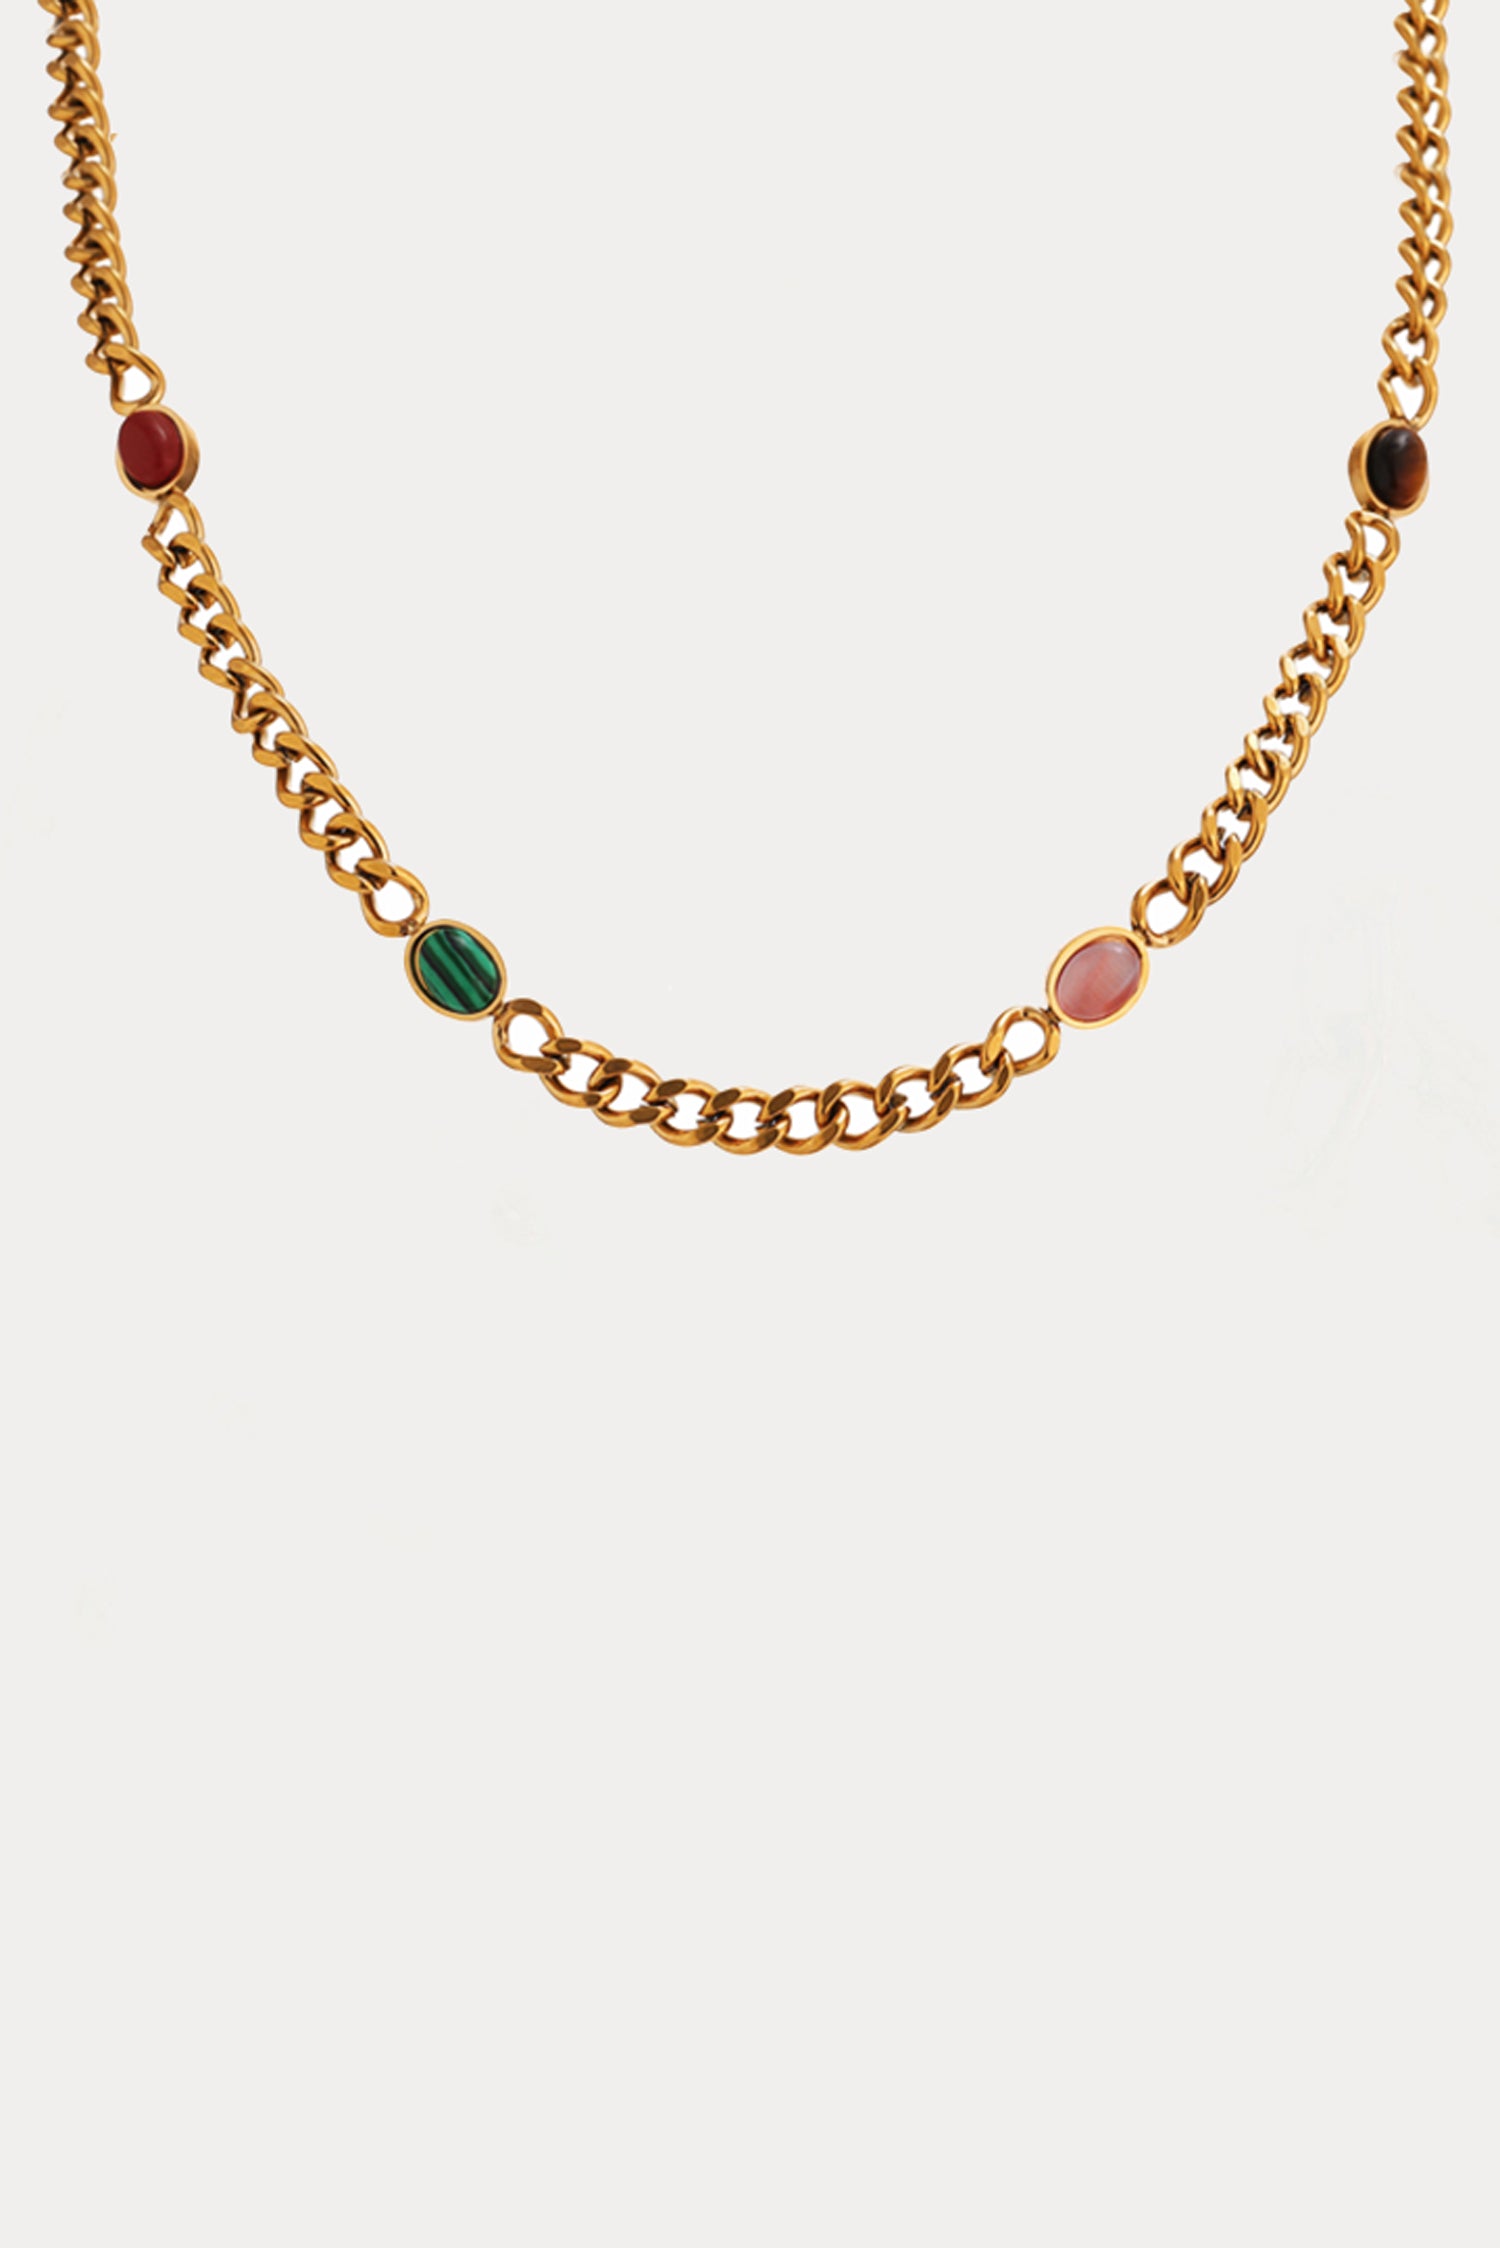 Gia necklace